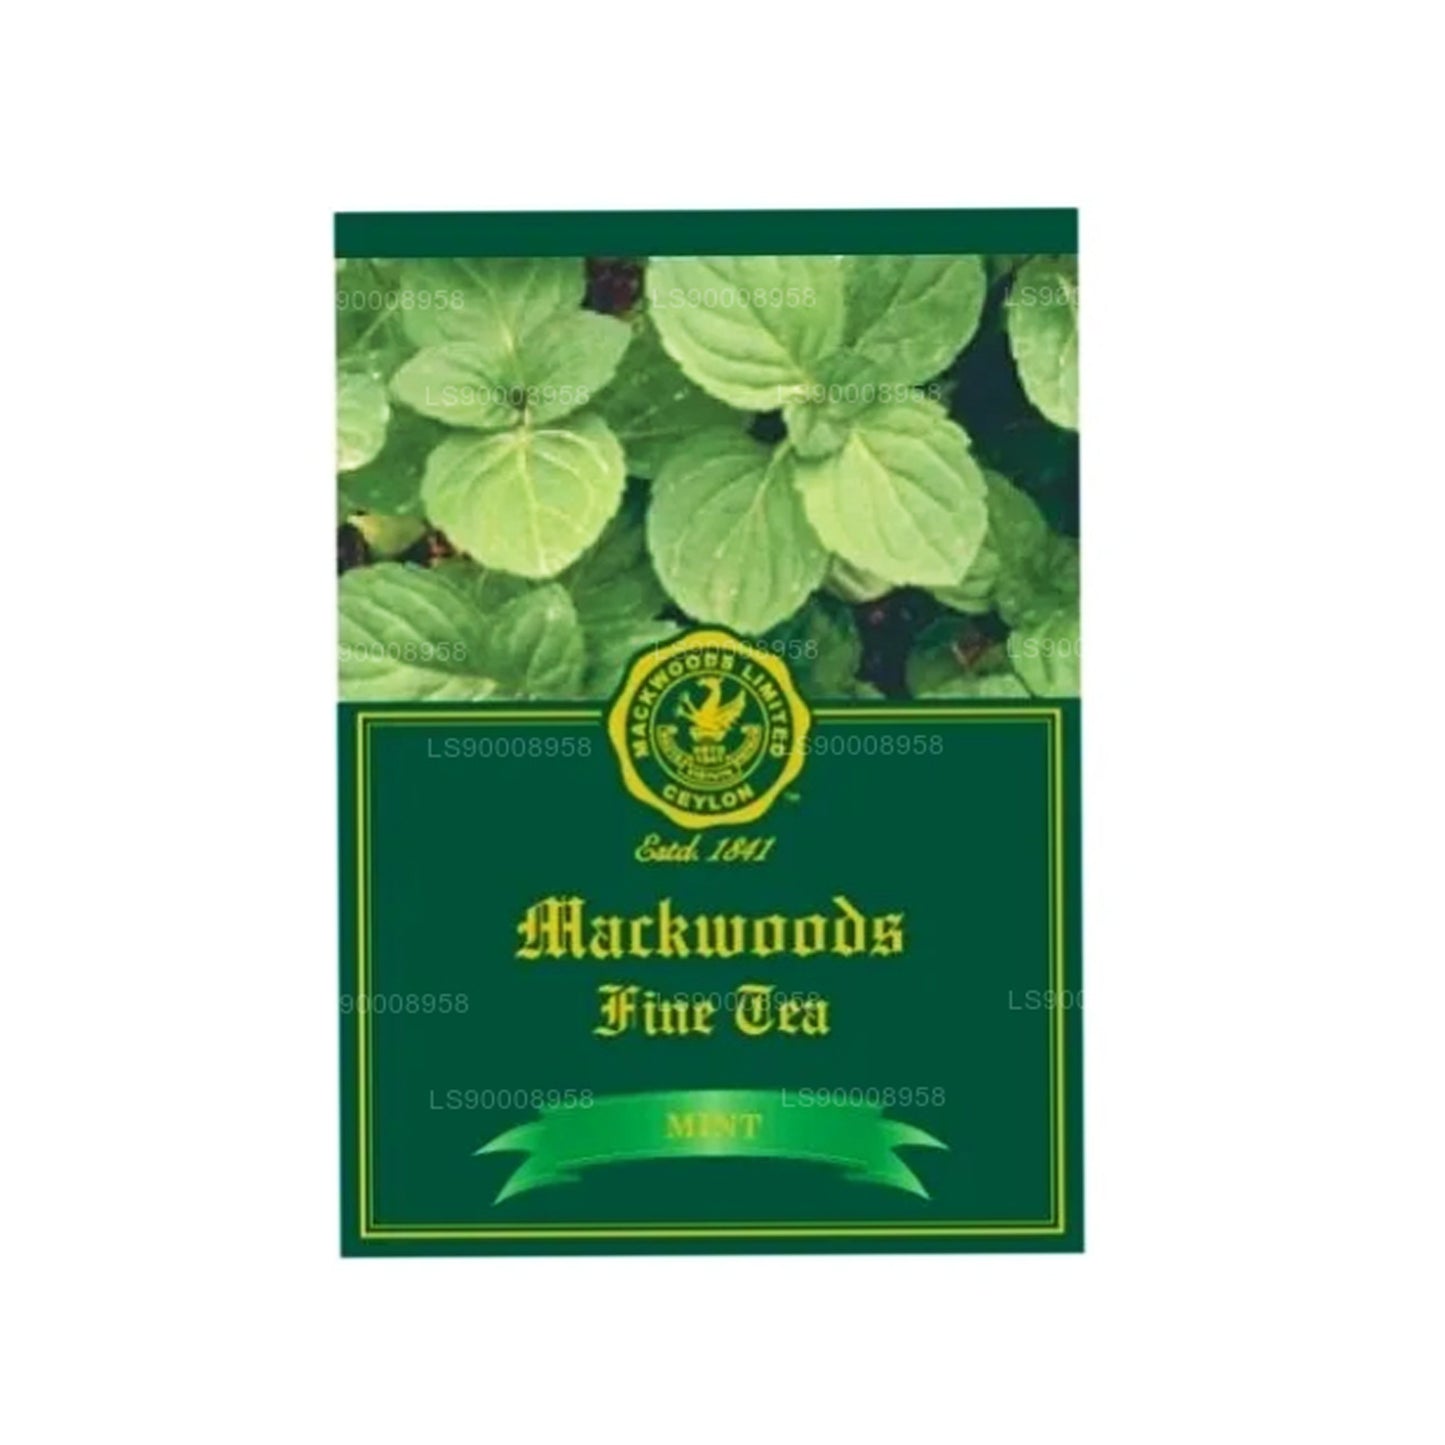 Mackwoods Czarna herbata cejlonska o smaku miętowym (50g) 25 torebek herbaty Count